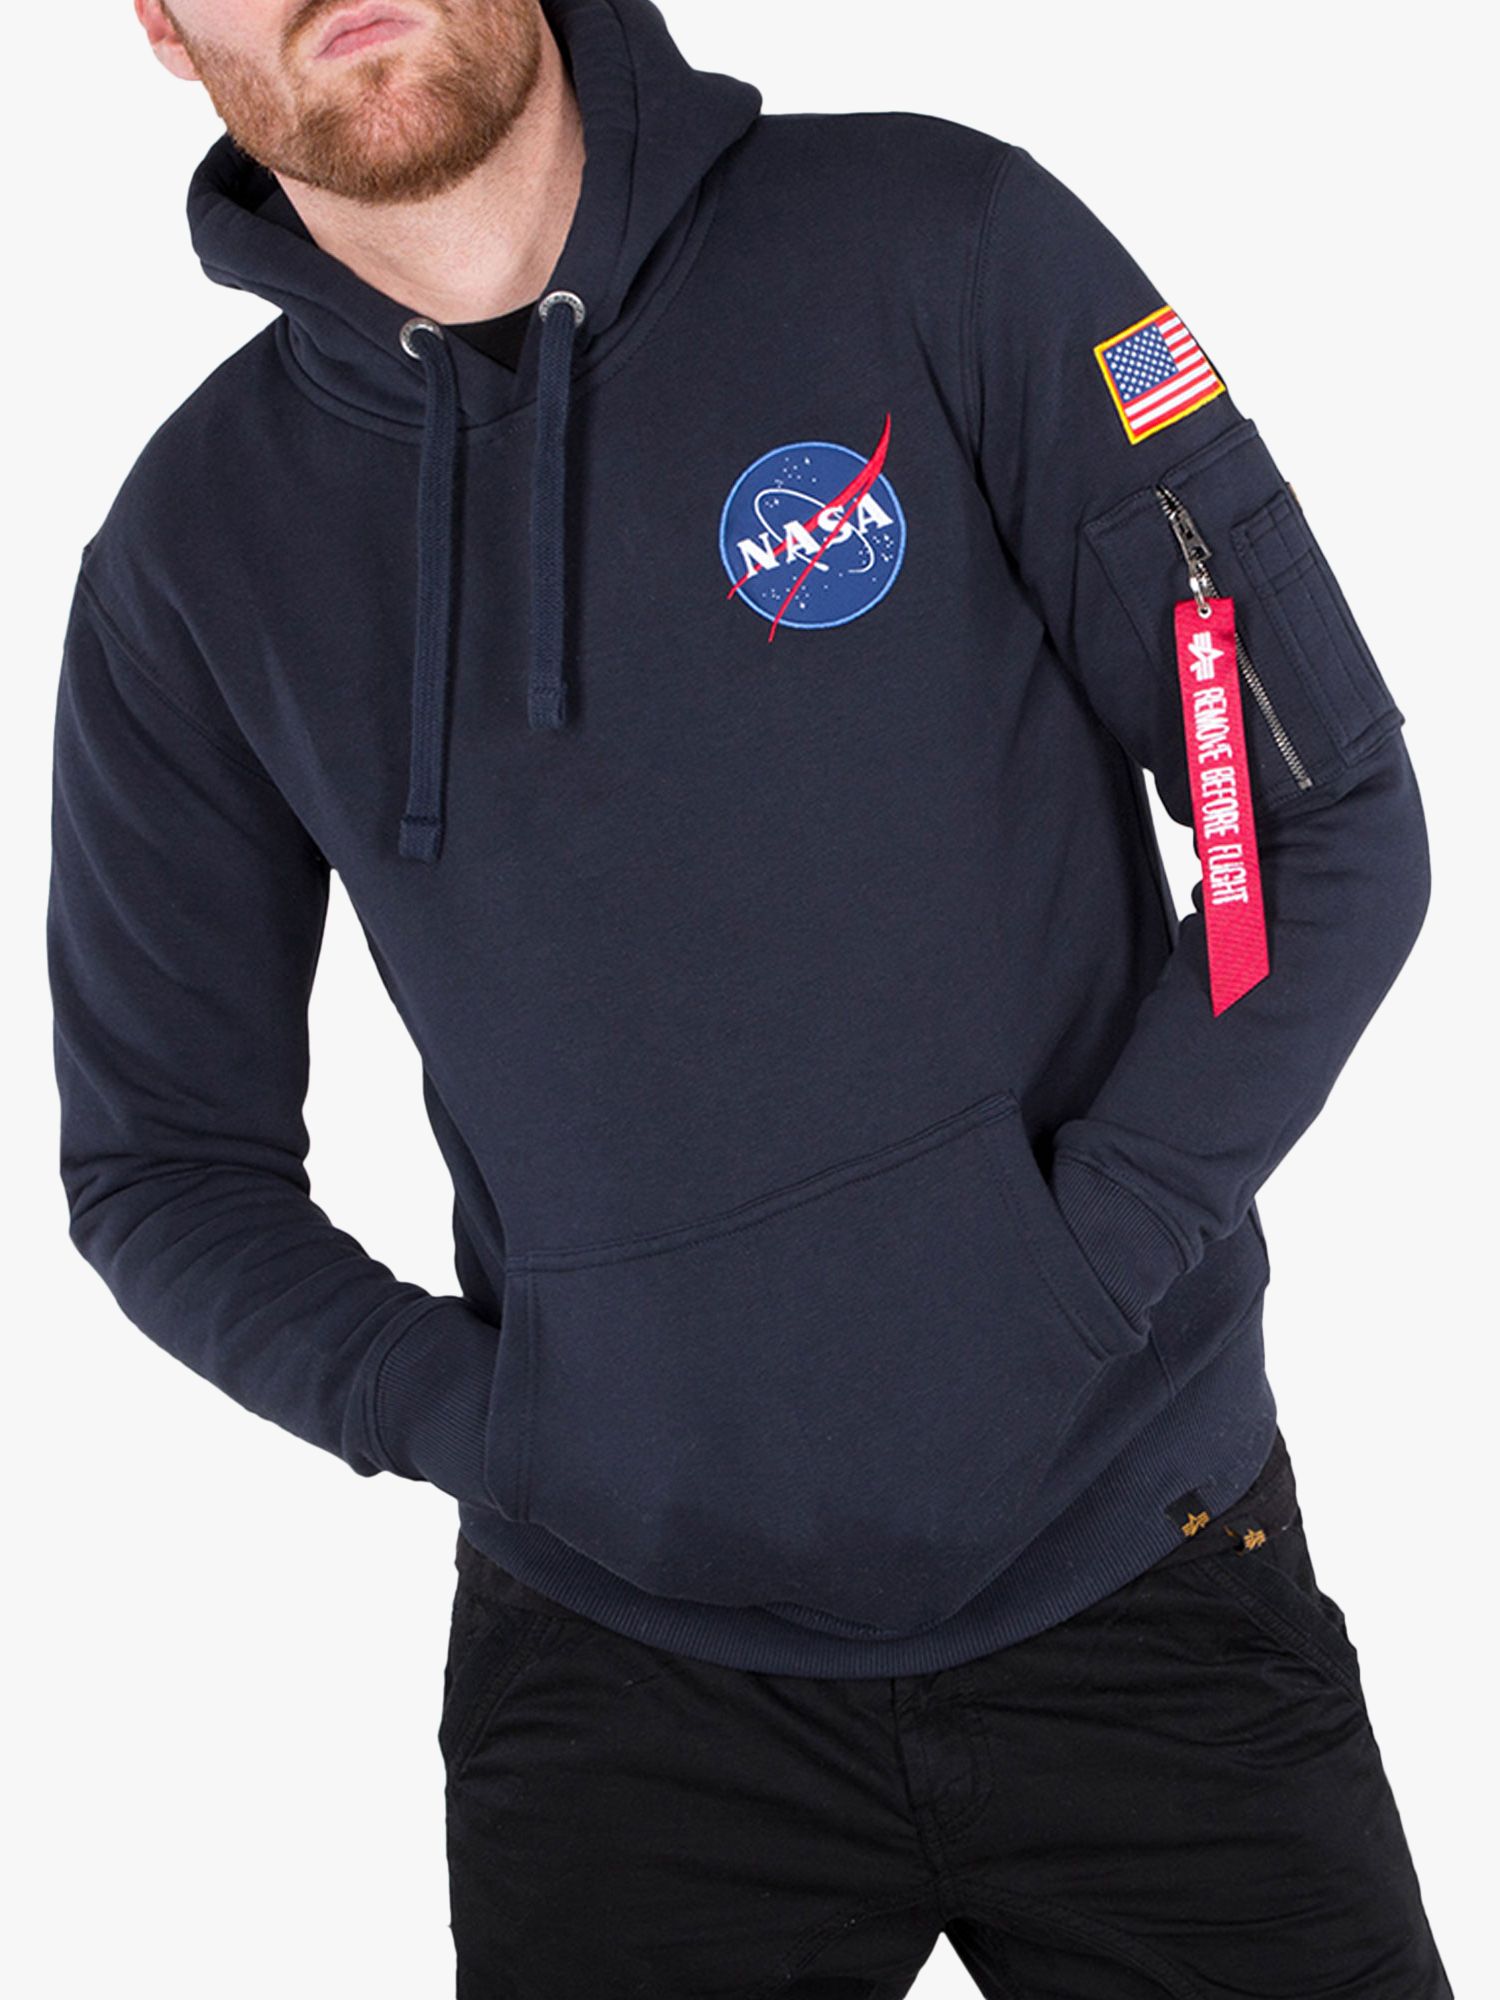 Apparel - Hoodies & Jackets - Page 1 - NASA Gear